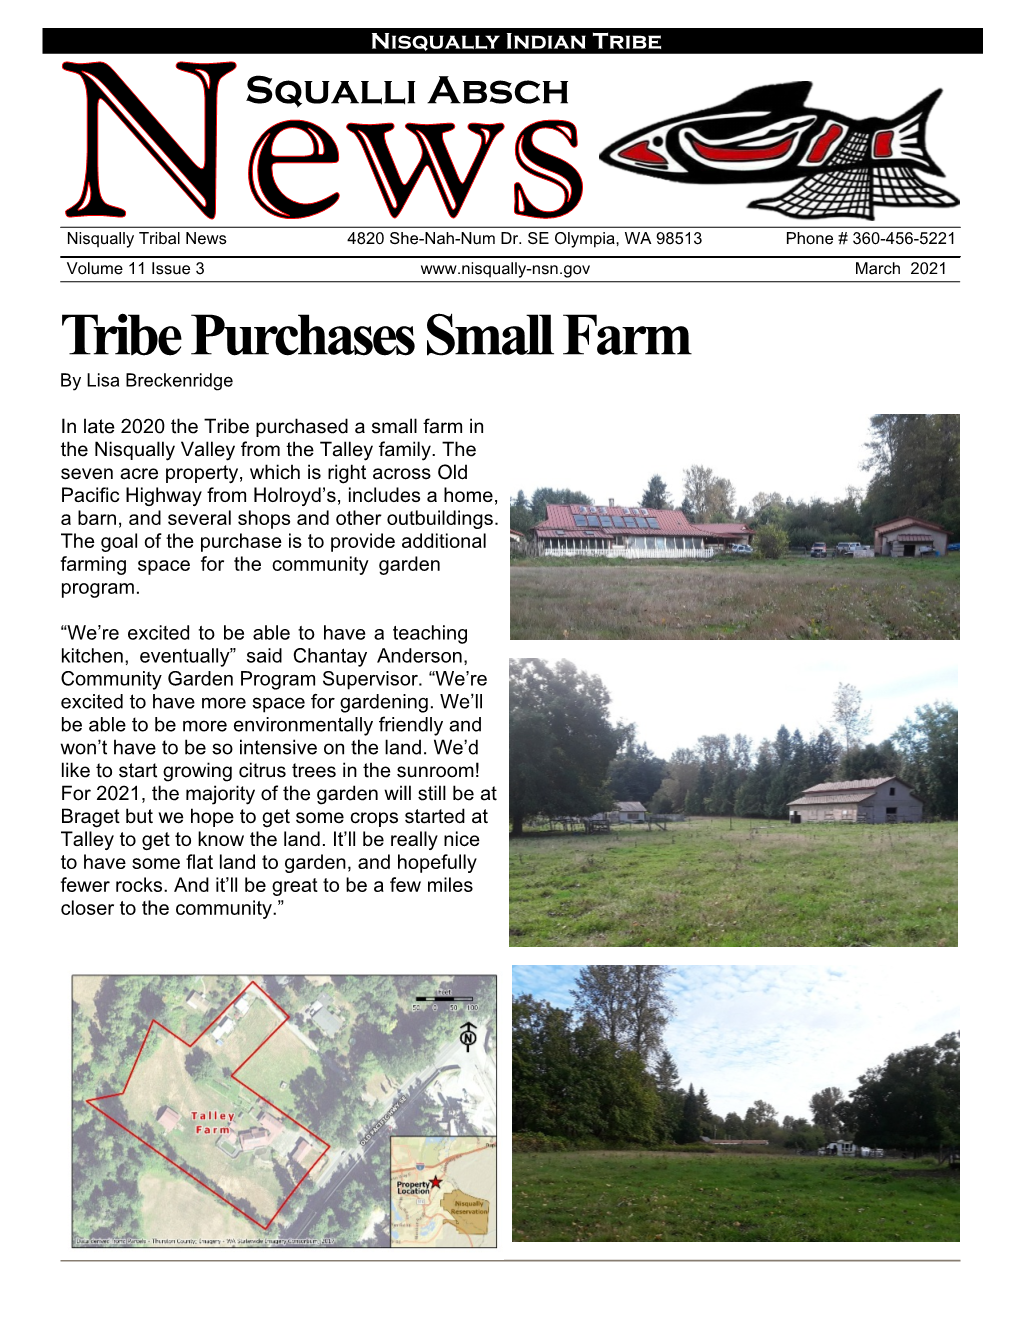 Tribe Purchases Small Farm by Lisa Breckenridge